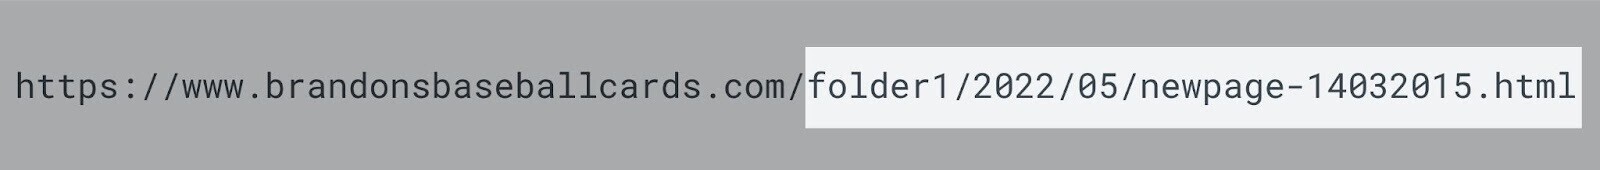 poorly optimized URL